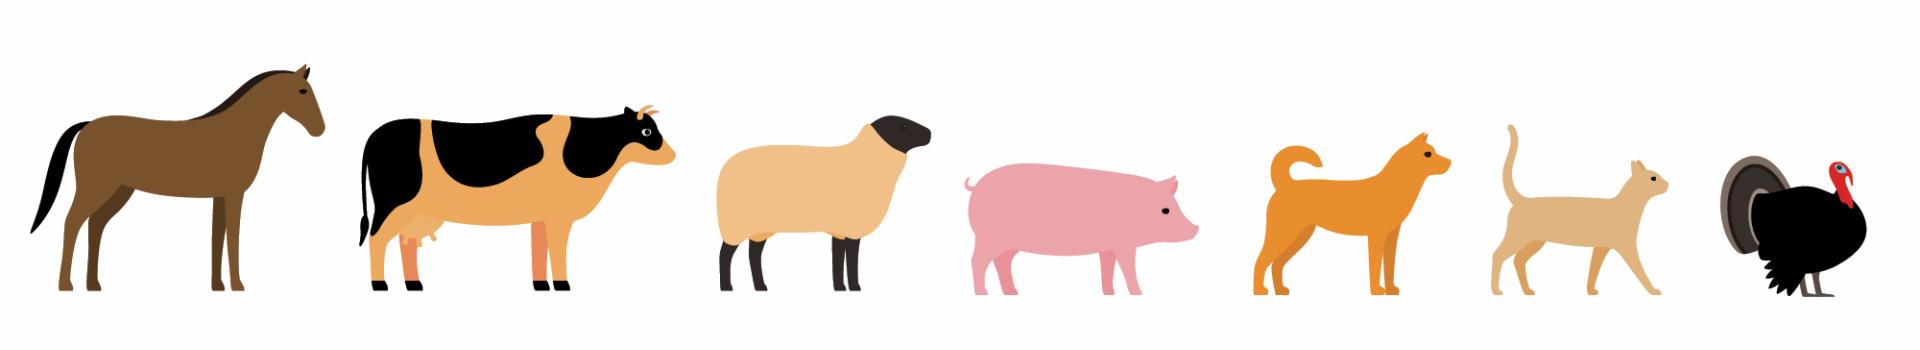 illustrated farm animals